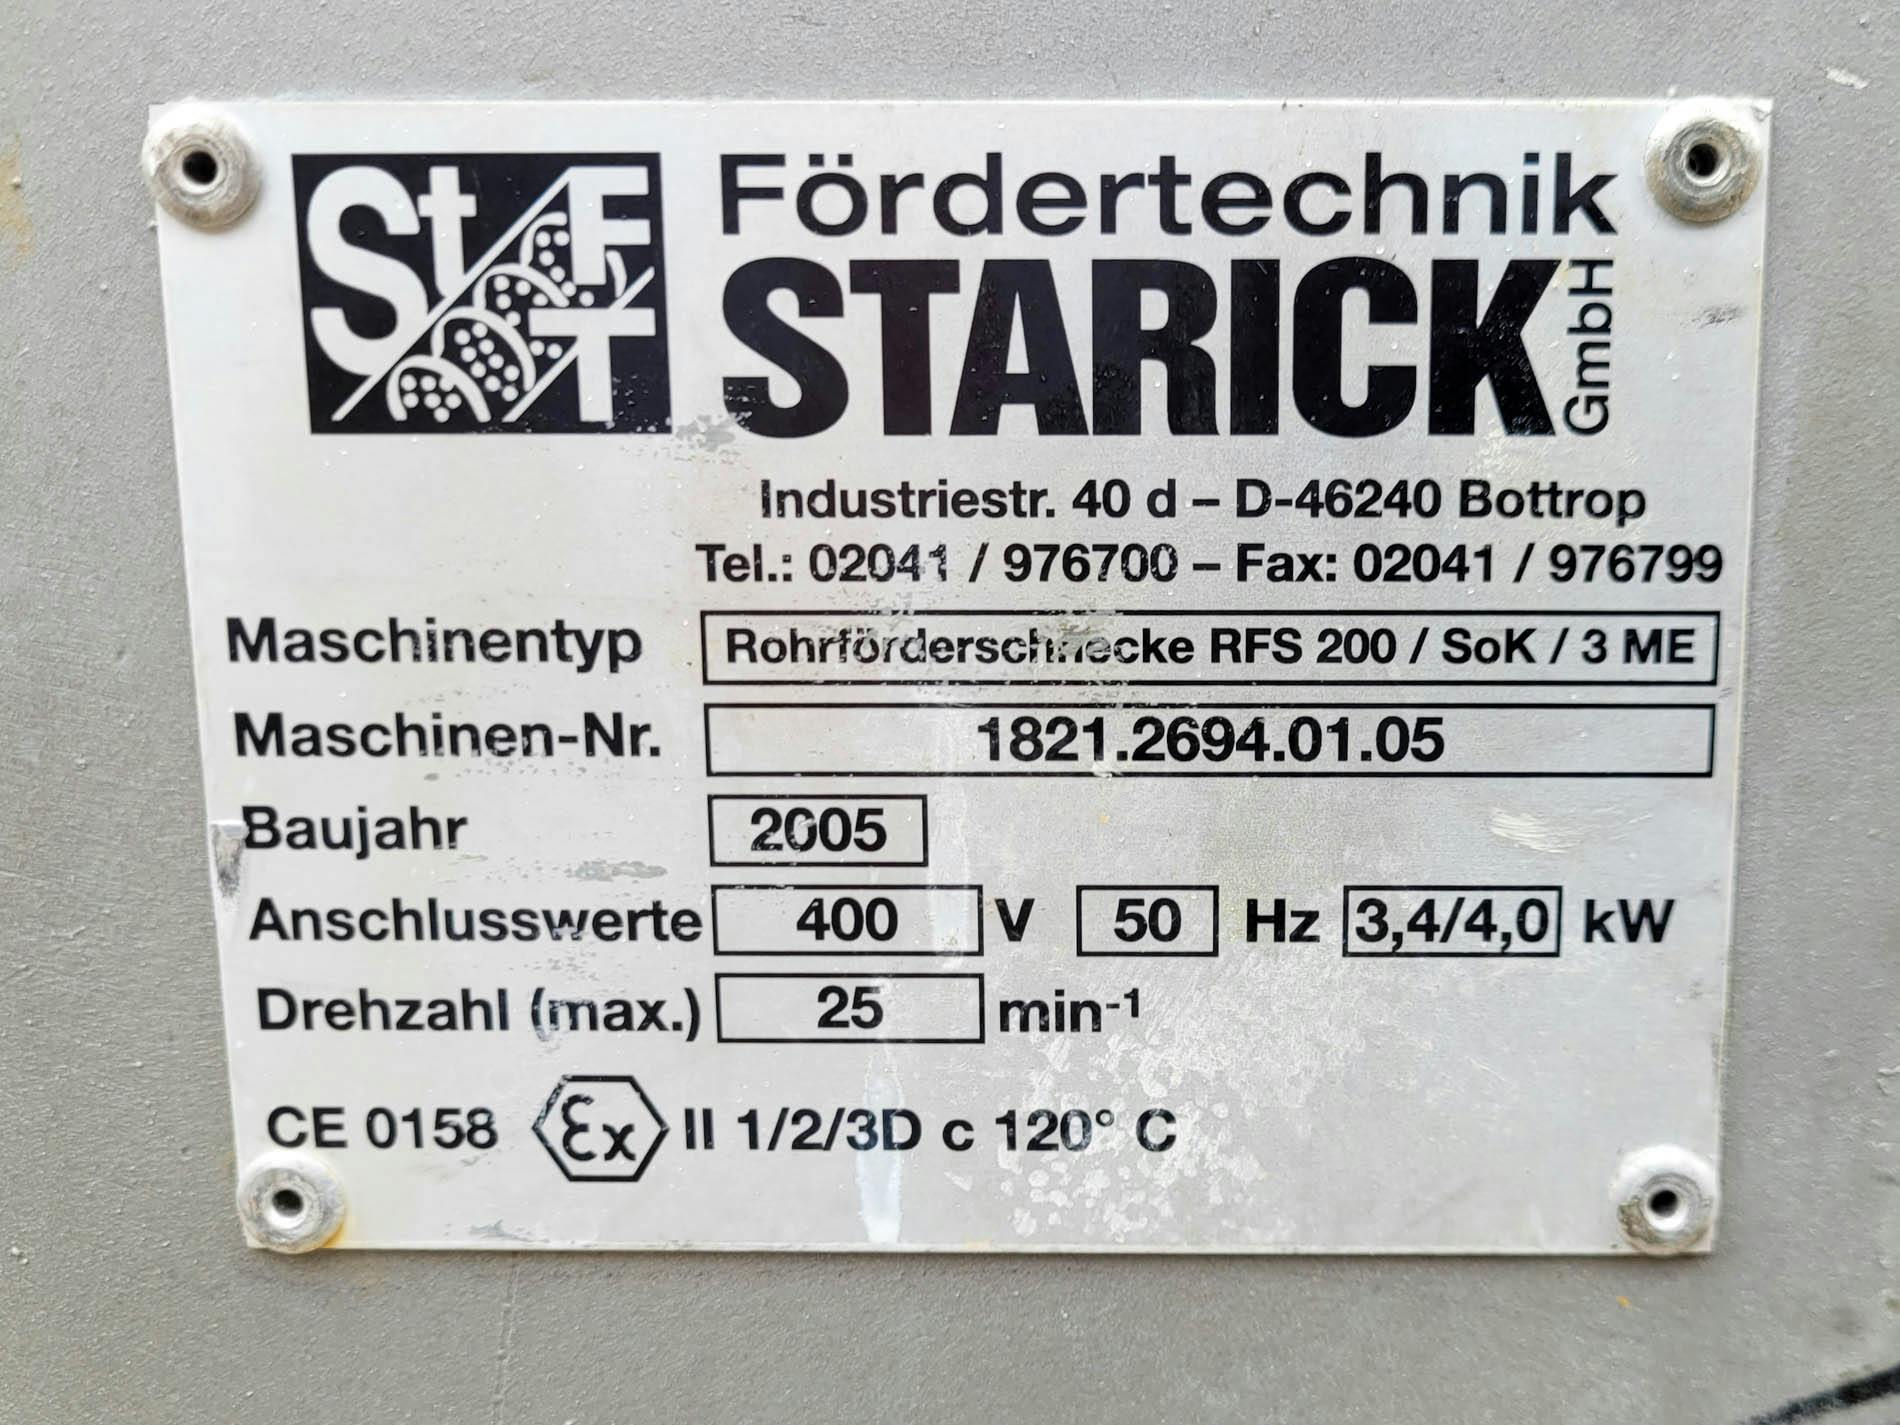 Starick Fördertechnik GmbH RFS-200 "cooling screw" - Horizontal screw conveyor - image 4